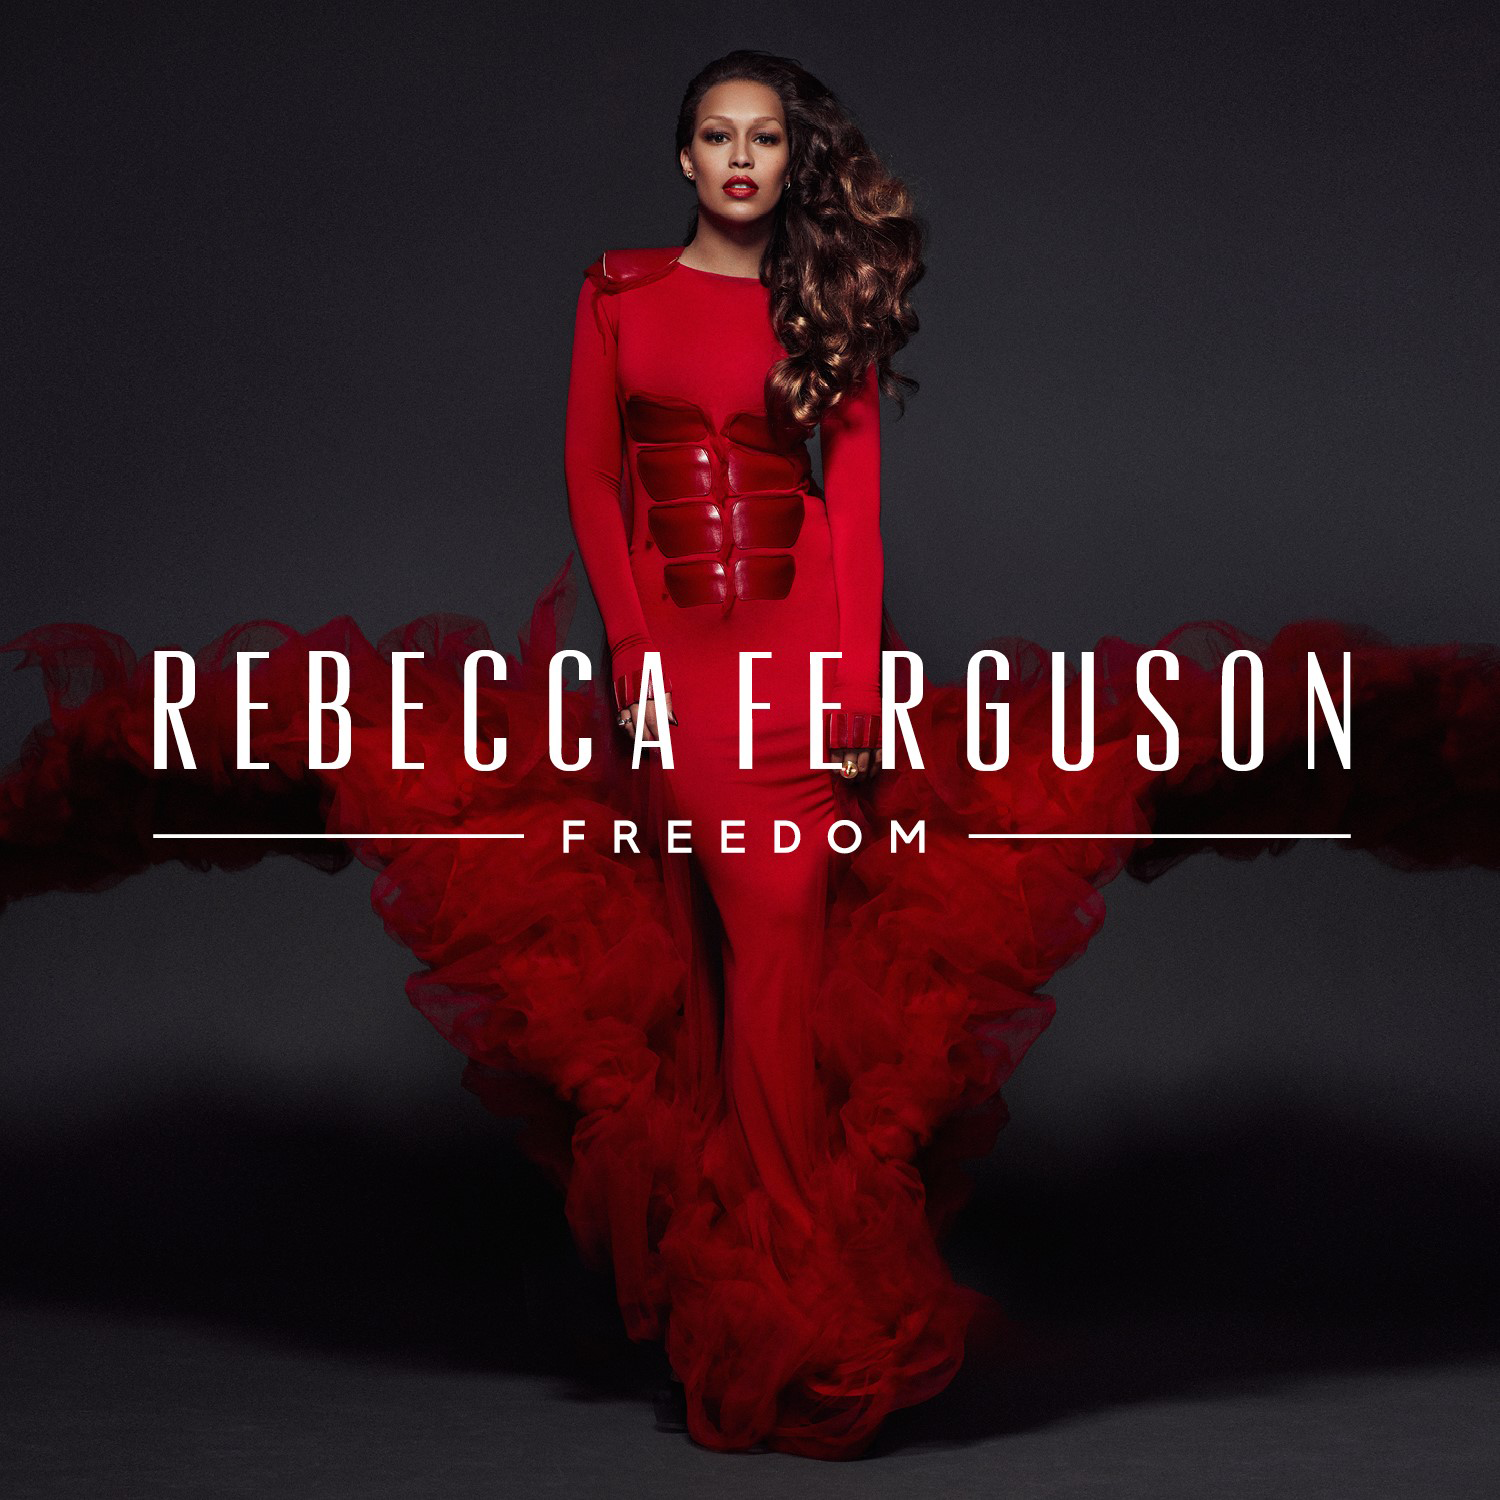 Rebecca-Ferguson-Freedom-2013-1500x1500.png